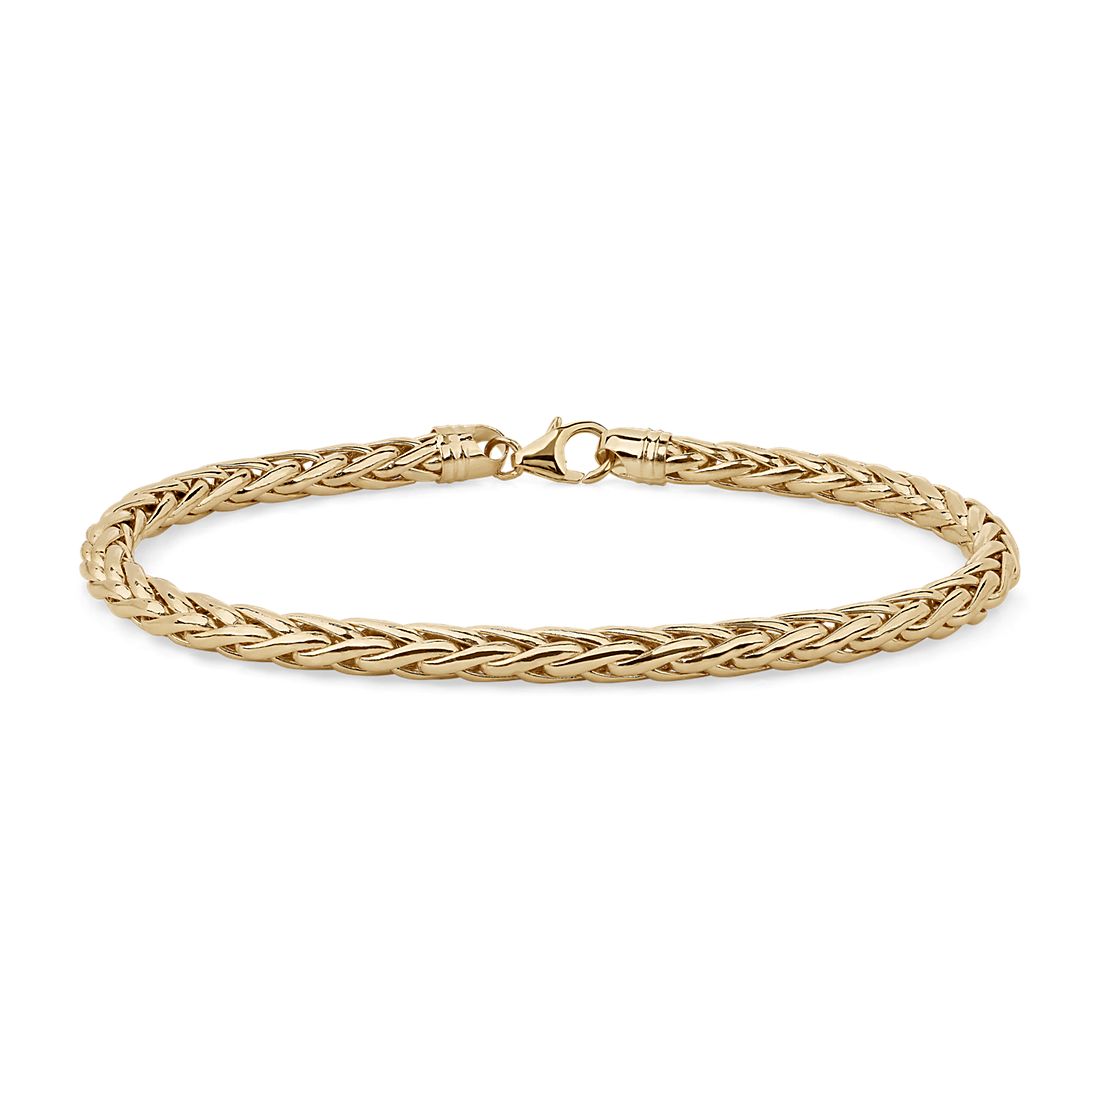 8.5" Men's Polished Wheat Chain Bracelet in 14k Yellow Gold (5mm)